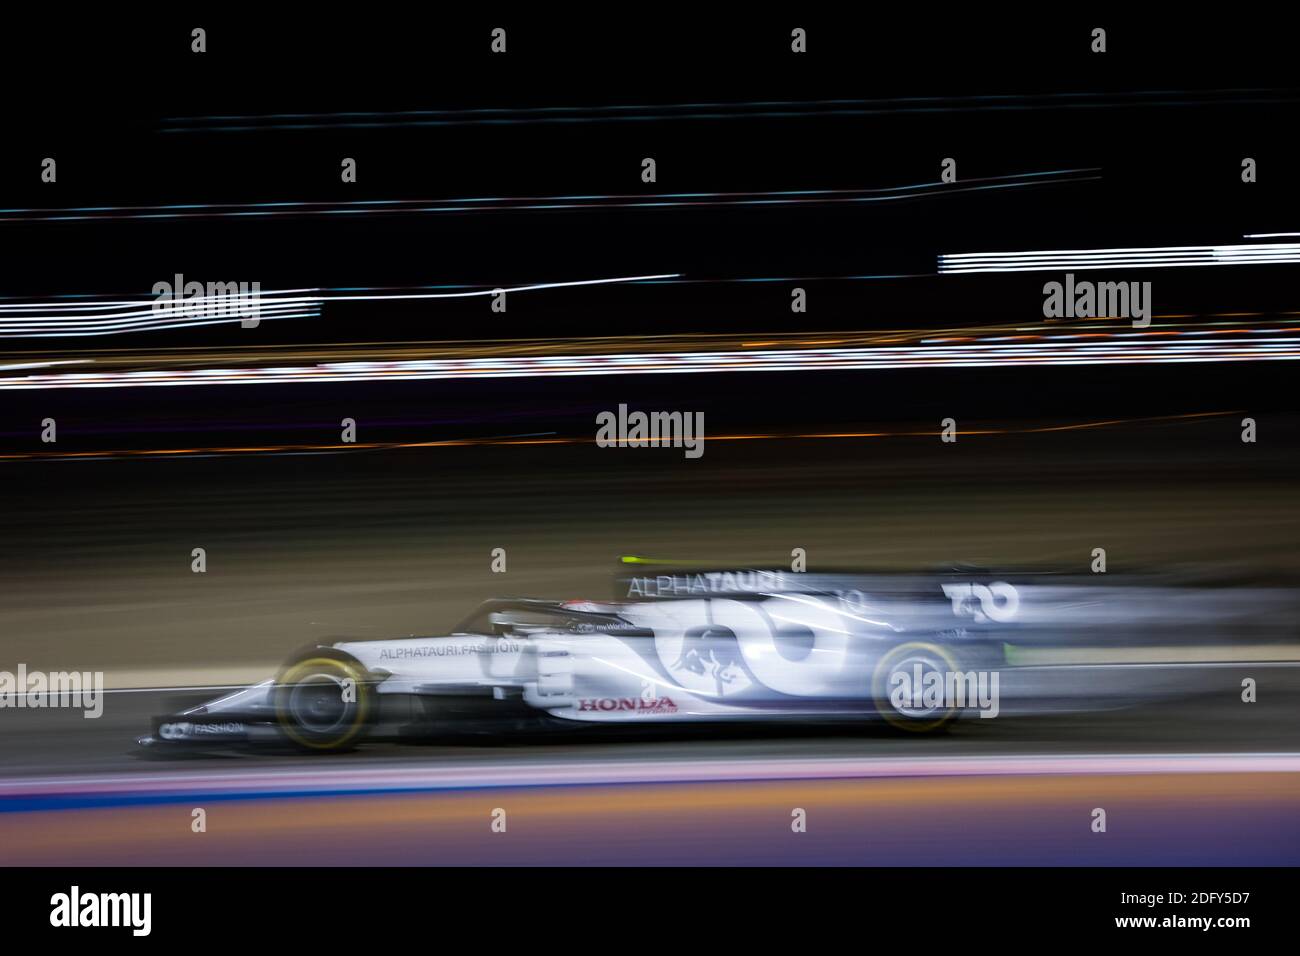 10 GASLY Pierre (fra), Scuderia AlphaTauri Honda AT01, in azione durante la Formula 1 Rolex Sakhir Grand Prix 2020, da Decembe/LM Foto Stock